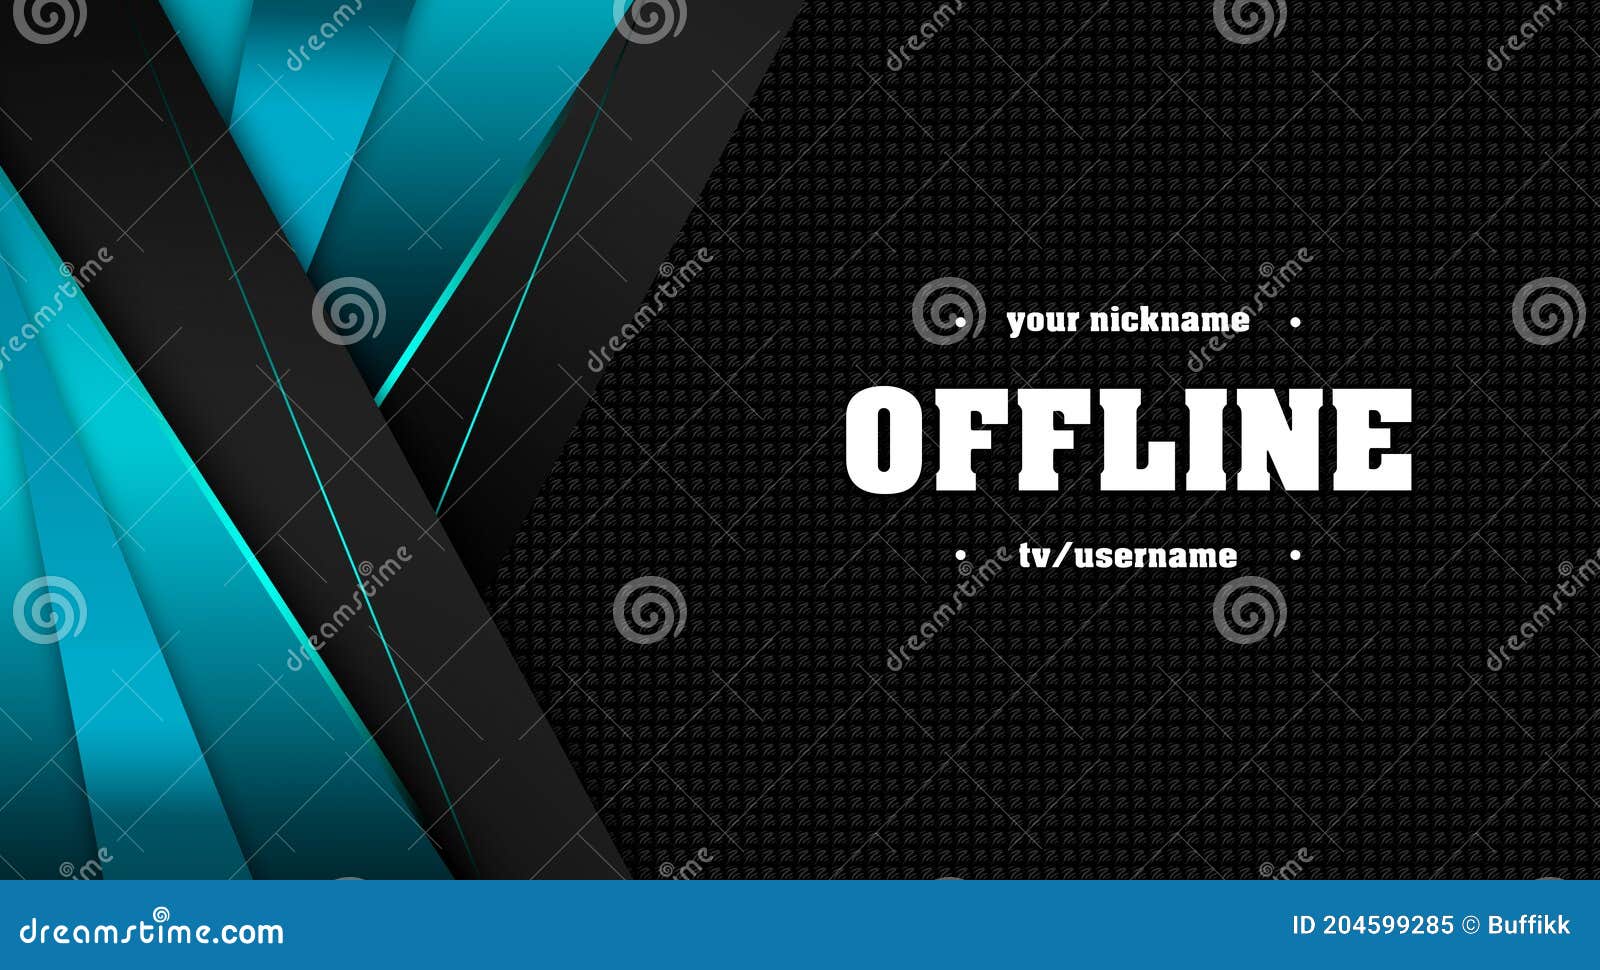 Offline Twitch Banner Background 16:9 for Stream. Offline Black Background  with Blue Gradient Lines Stock Illustration - Illustration of design,  screen: 204599285